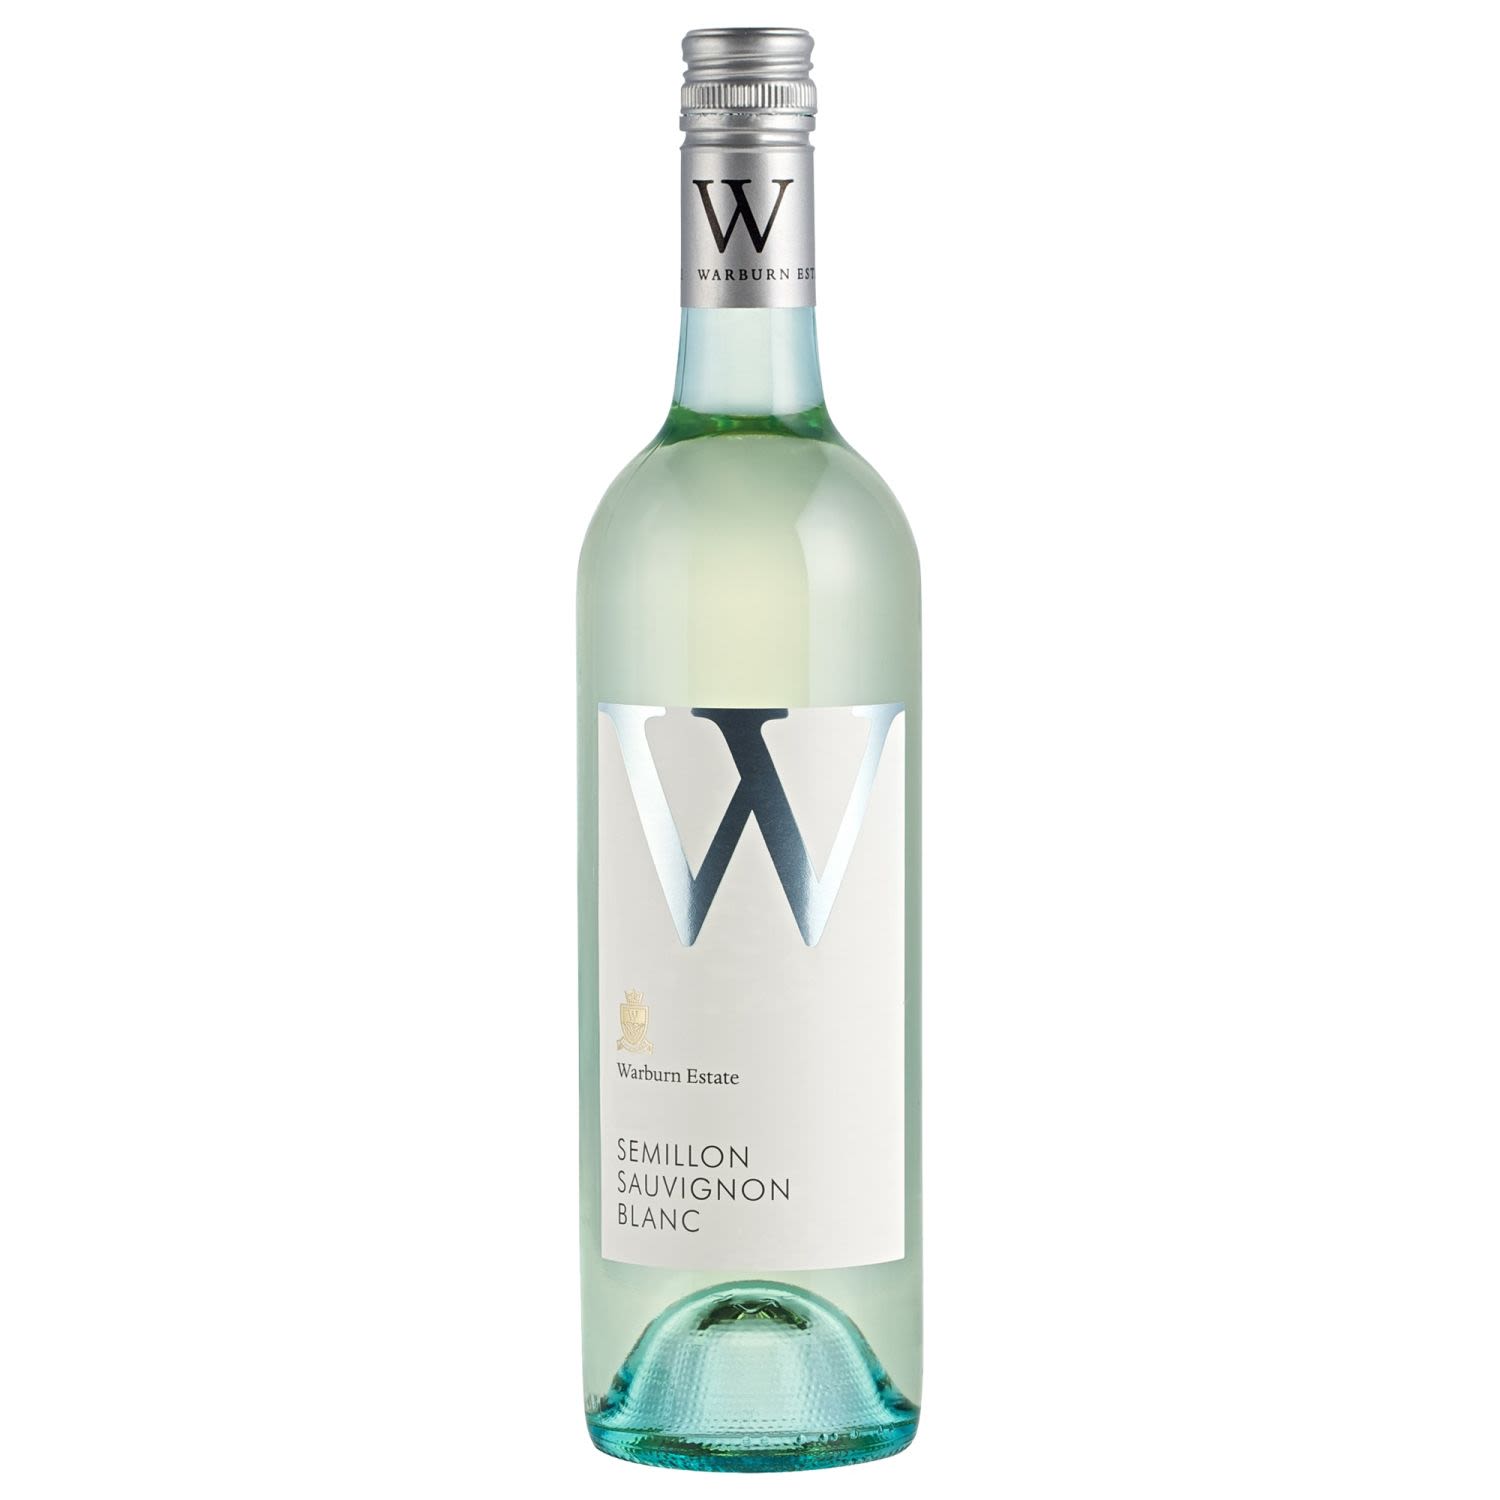 Warburn Premium Reserve Semillon Sauvignon Blanc<br /> <br />Alcohol Volume: 11.50%<br /><br />Pack Format: Bottle<br /><br />Standard Drinks: 6.5</br /><br />Pack Type: Bottle<br /><br />Country of Origin: Australia<br /><br />Region: Barossa Valley<br /><br />Vintage: '2018<br />